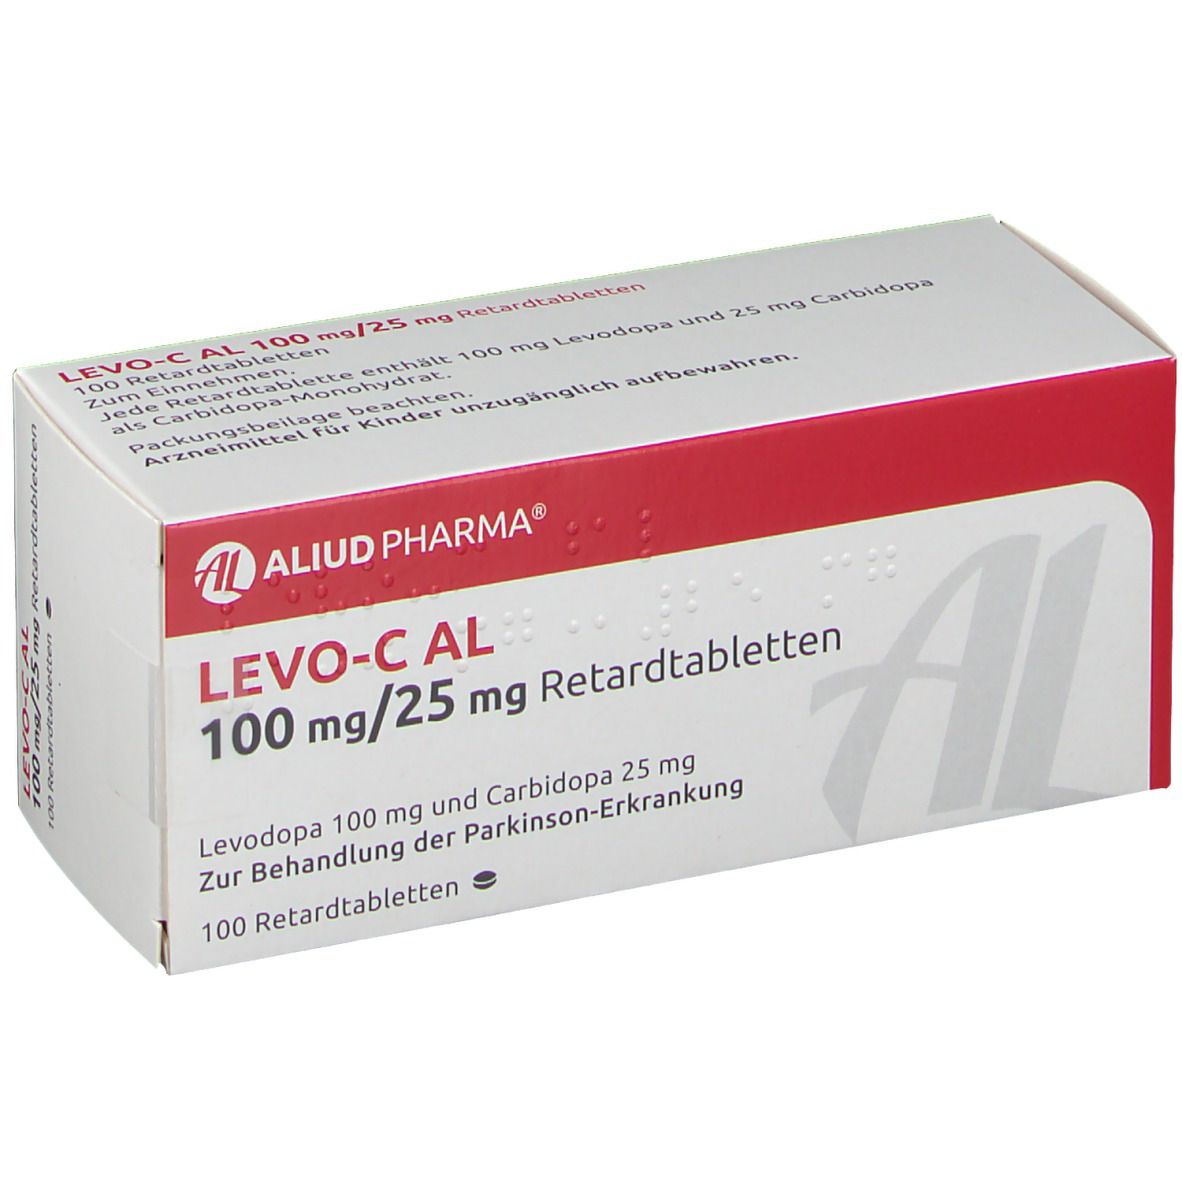 Levo-C AL 100 mg/25 mg